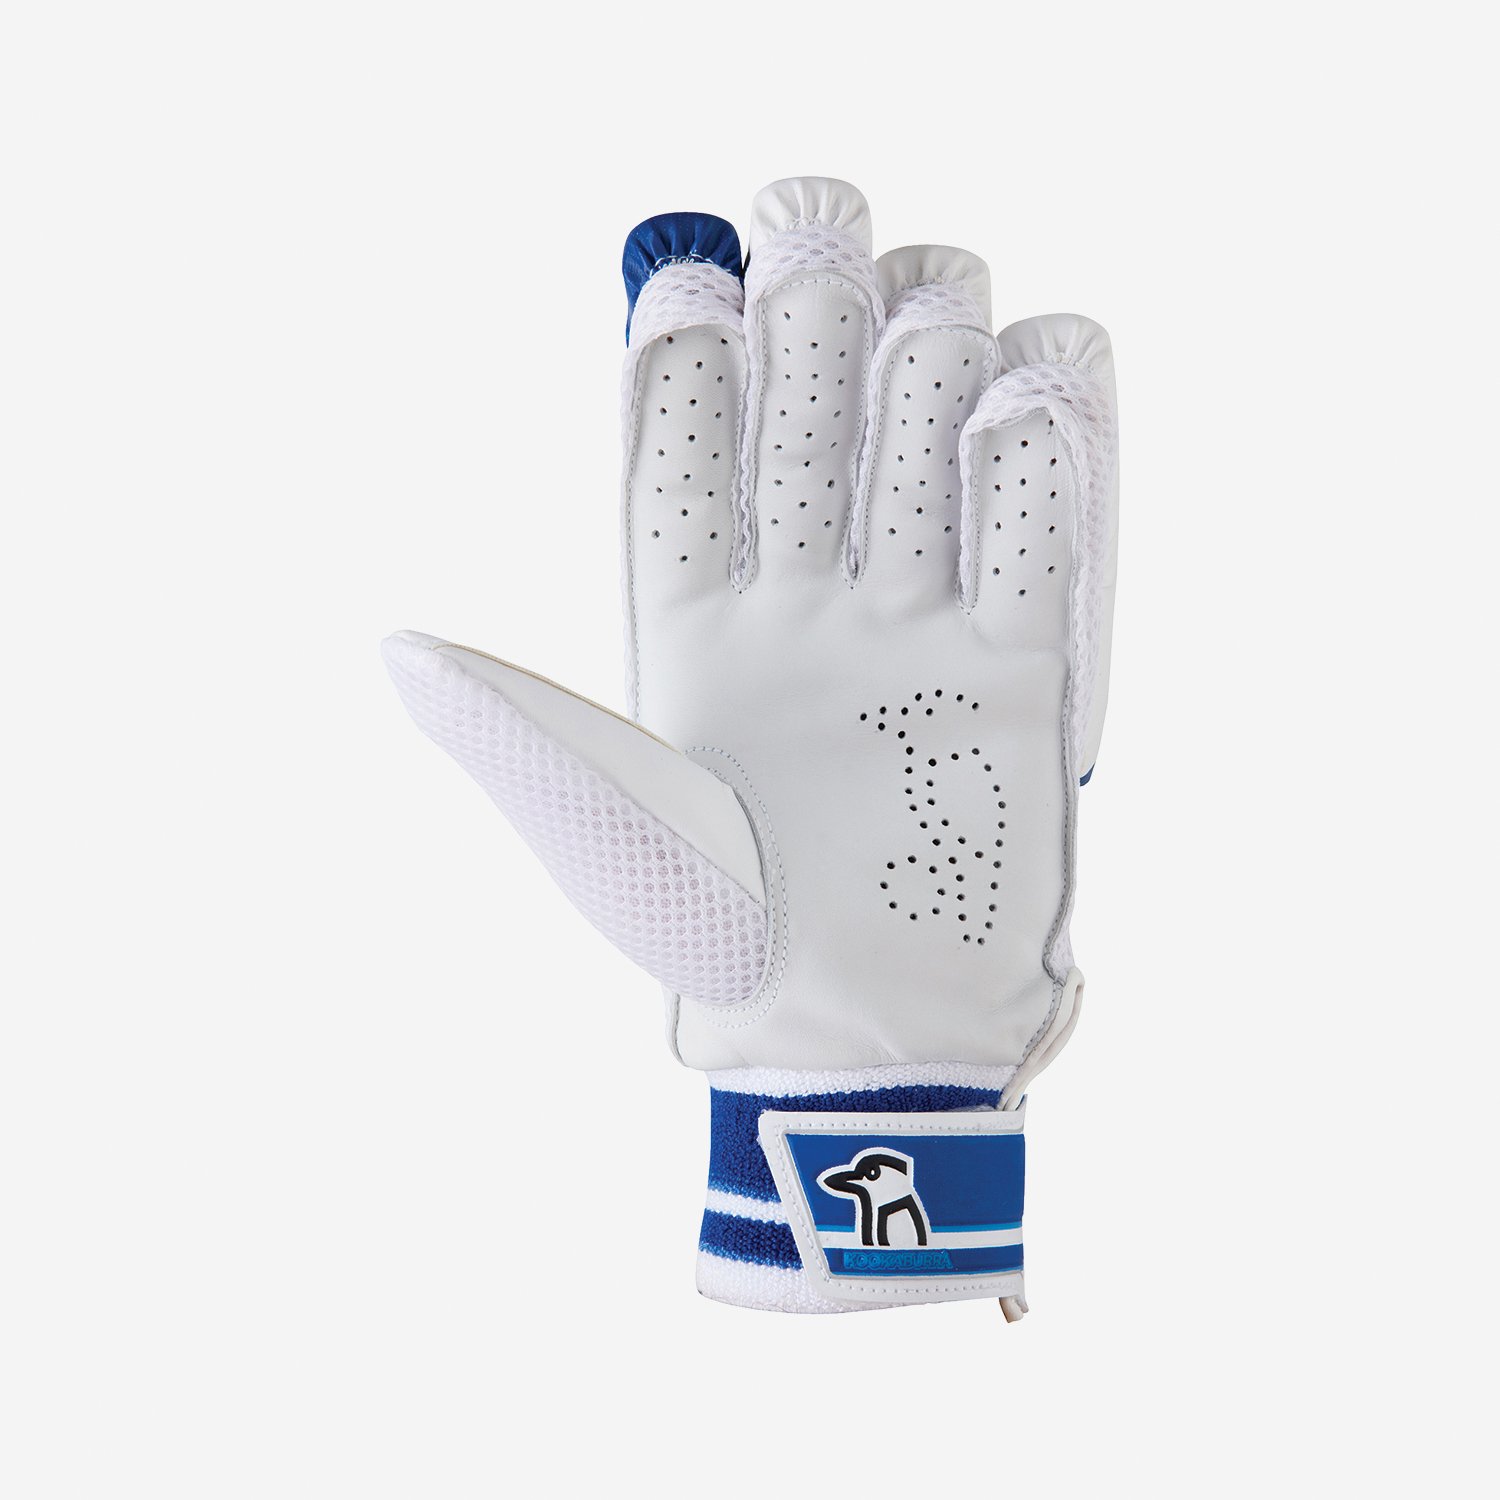 Pace Pro 6.0 Batting Gloves